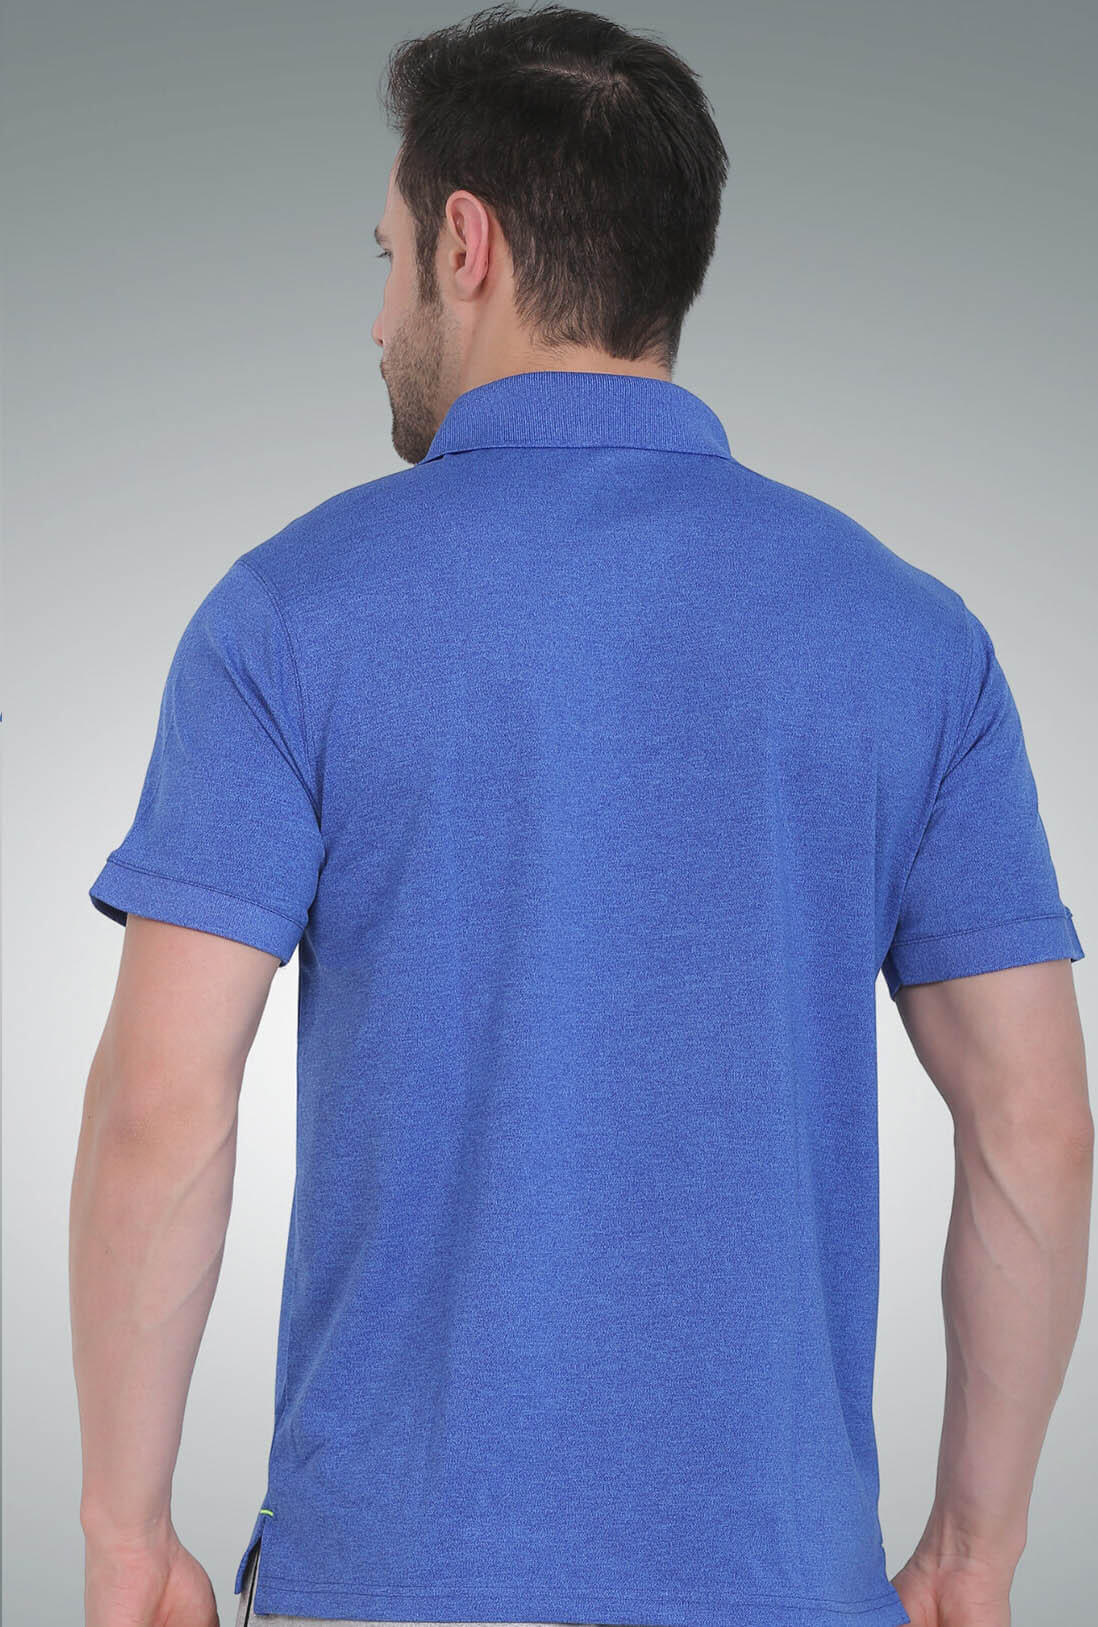 Men's Blue Melange T-Shirt